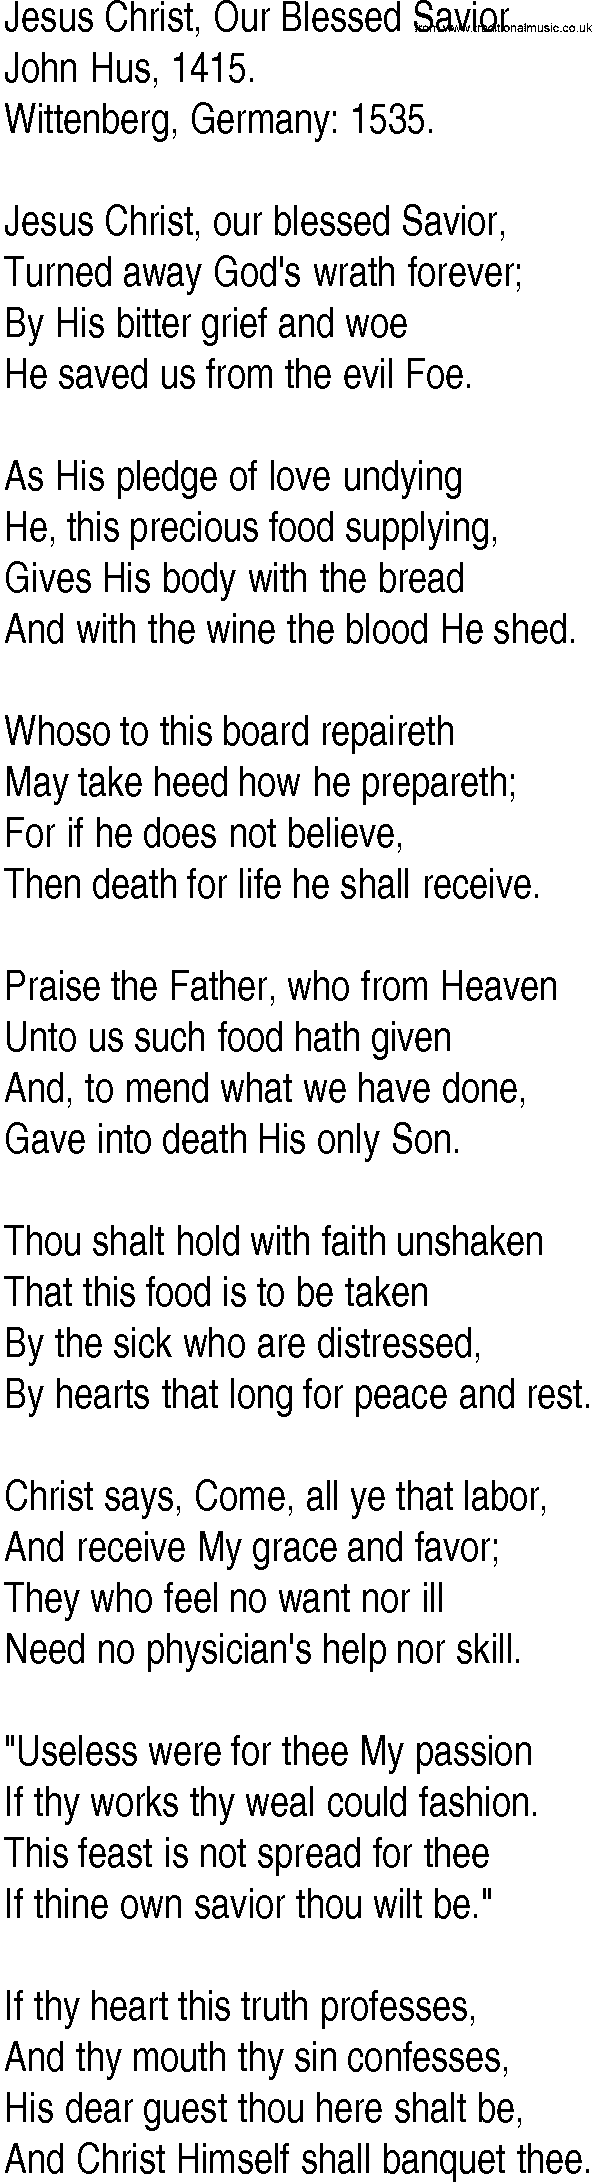 Hymn and Gospel Song: Jesus Christ, Our Blessed Savior by John Hus lyrics